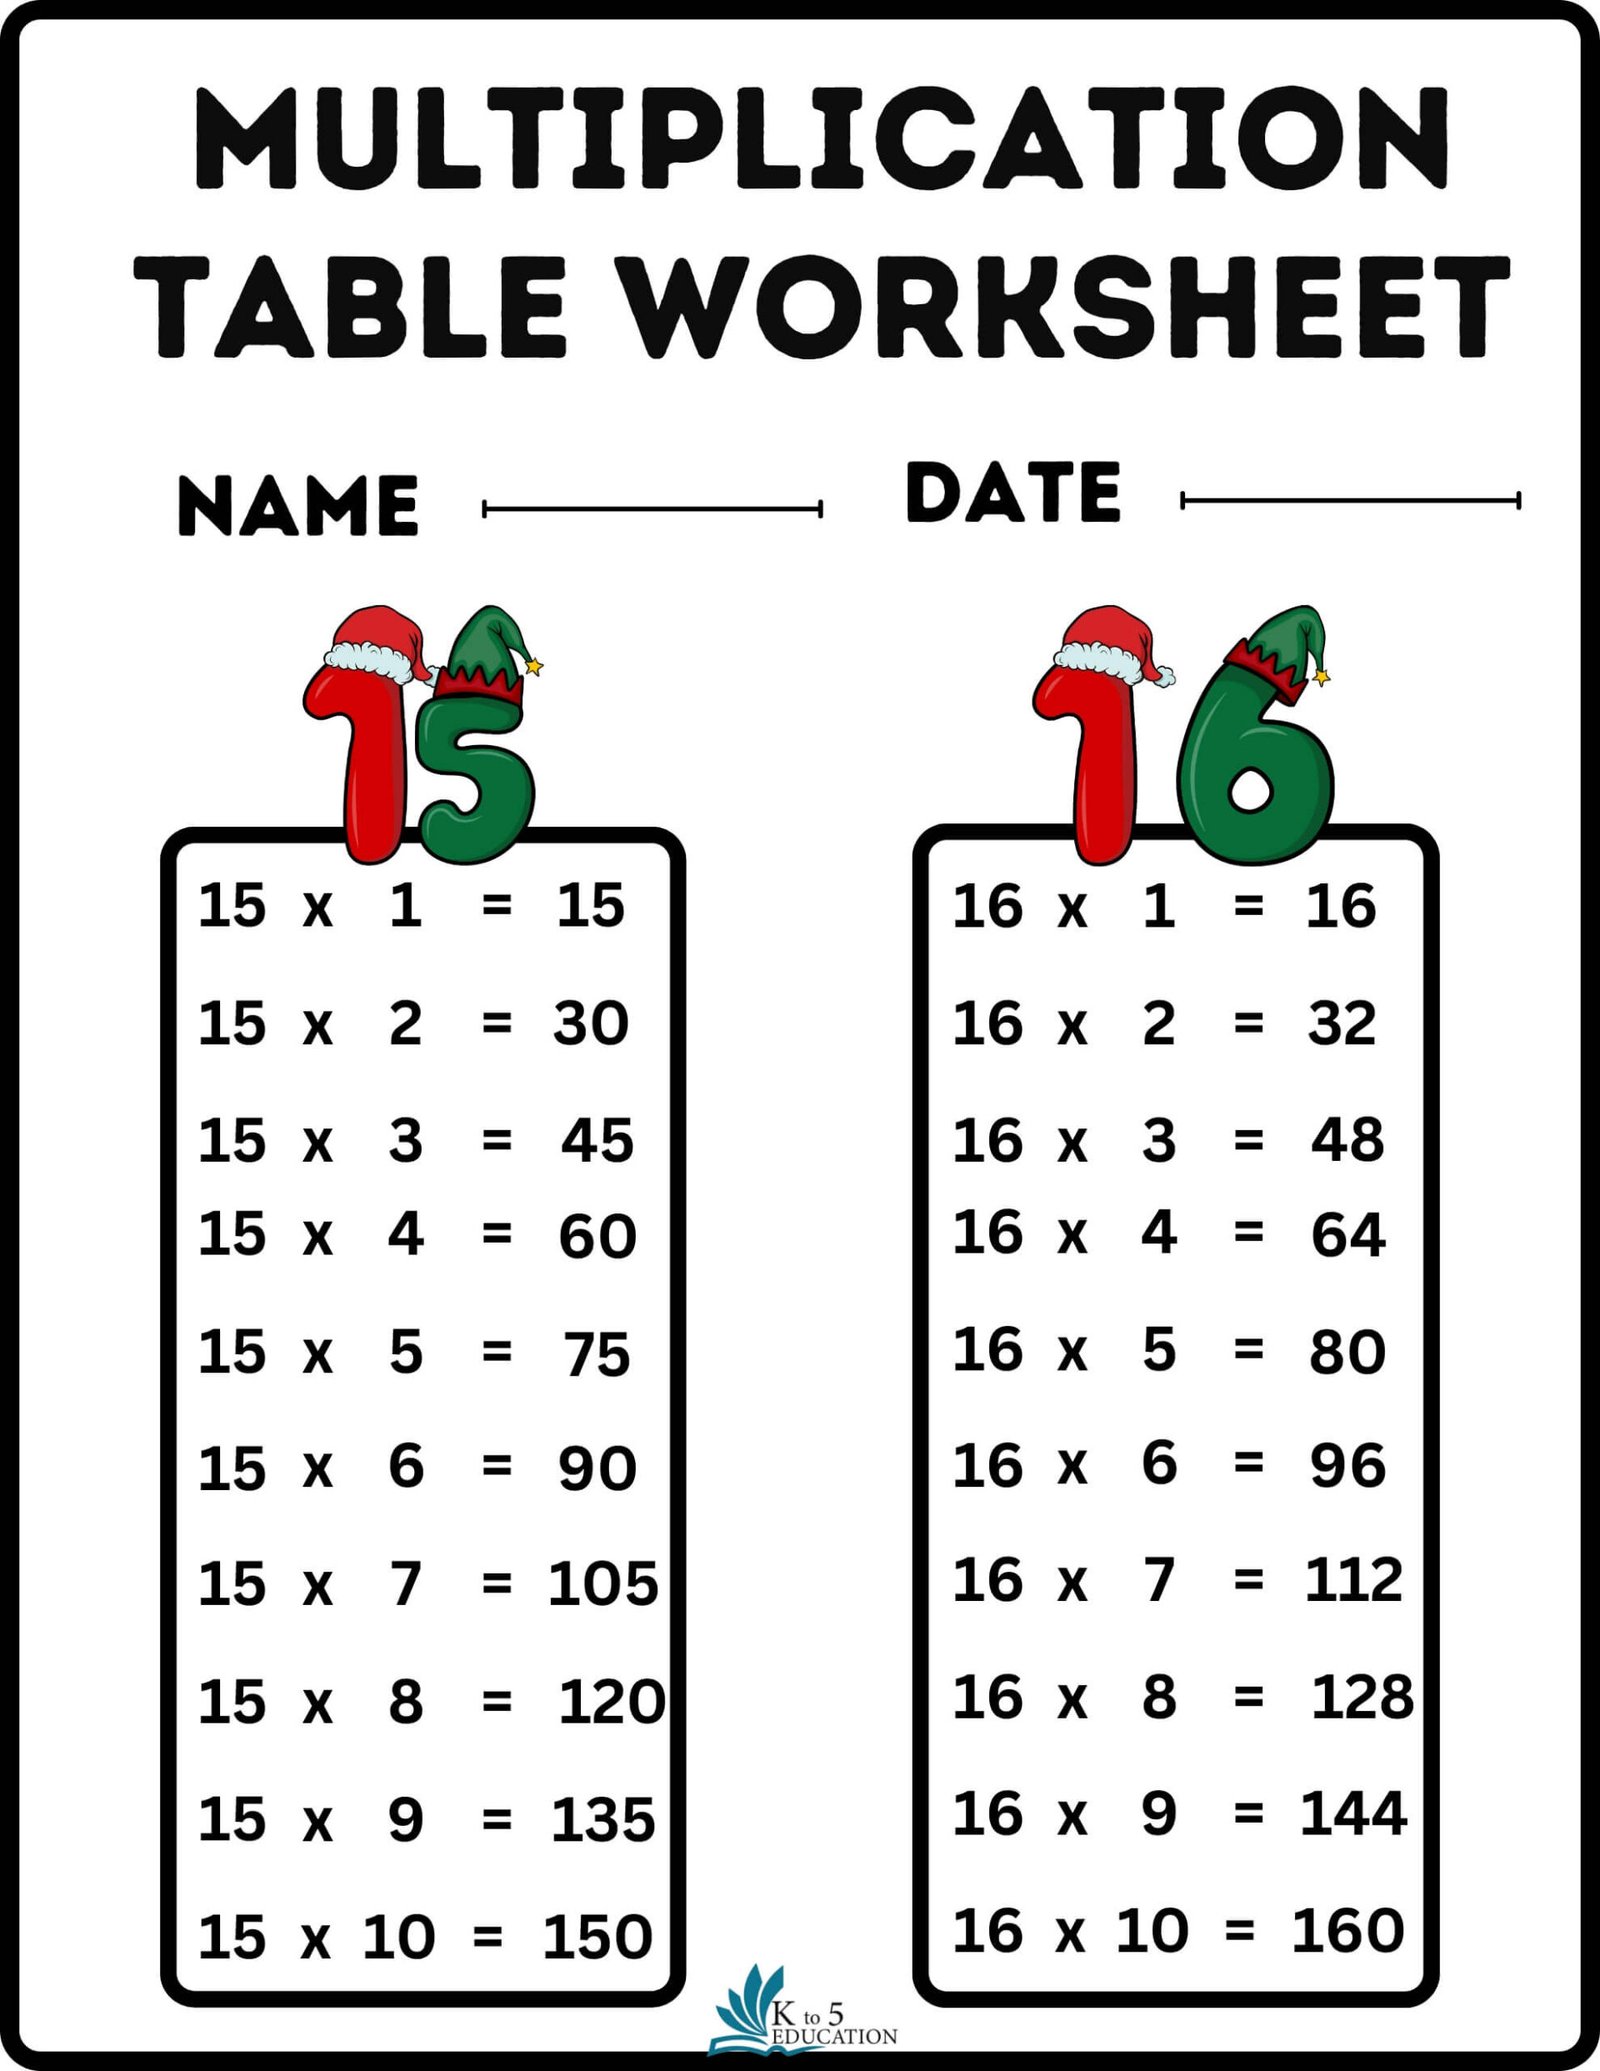 Multiplication Worksheet 2 9